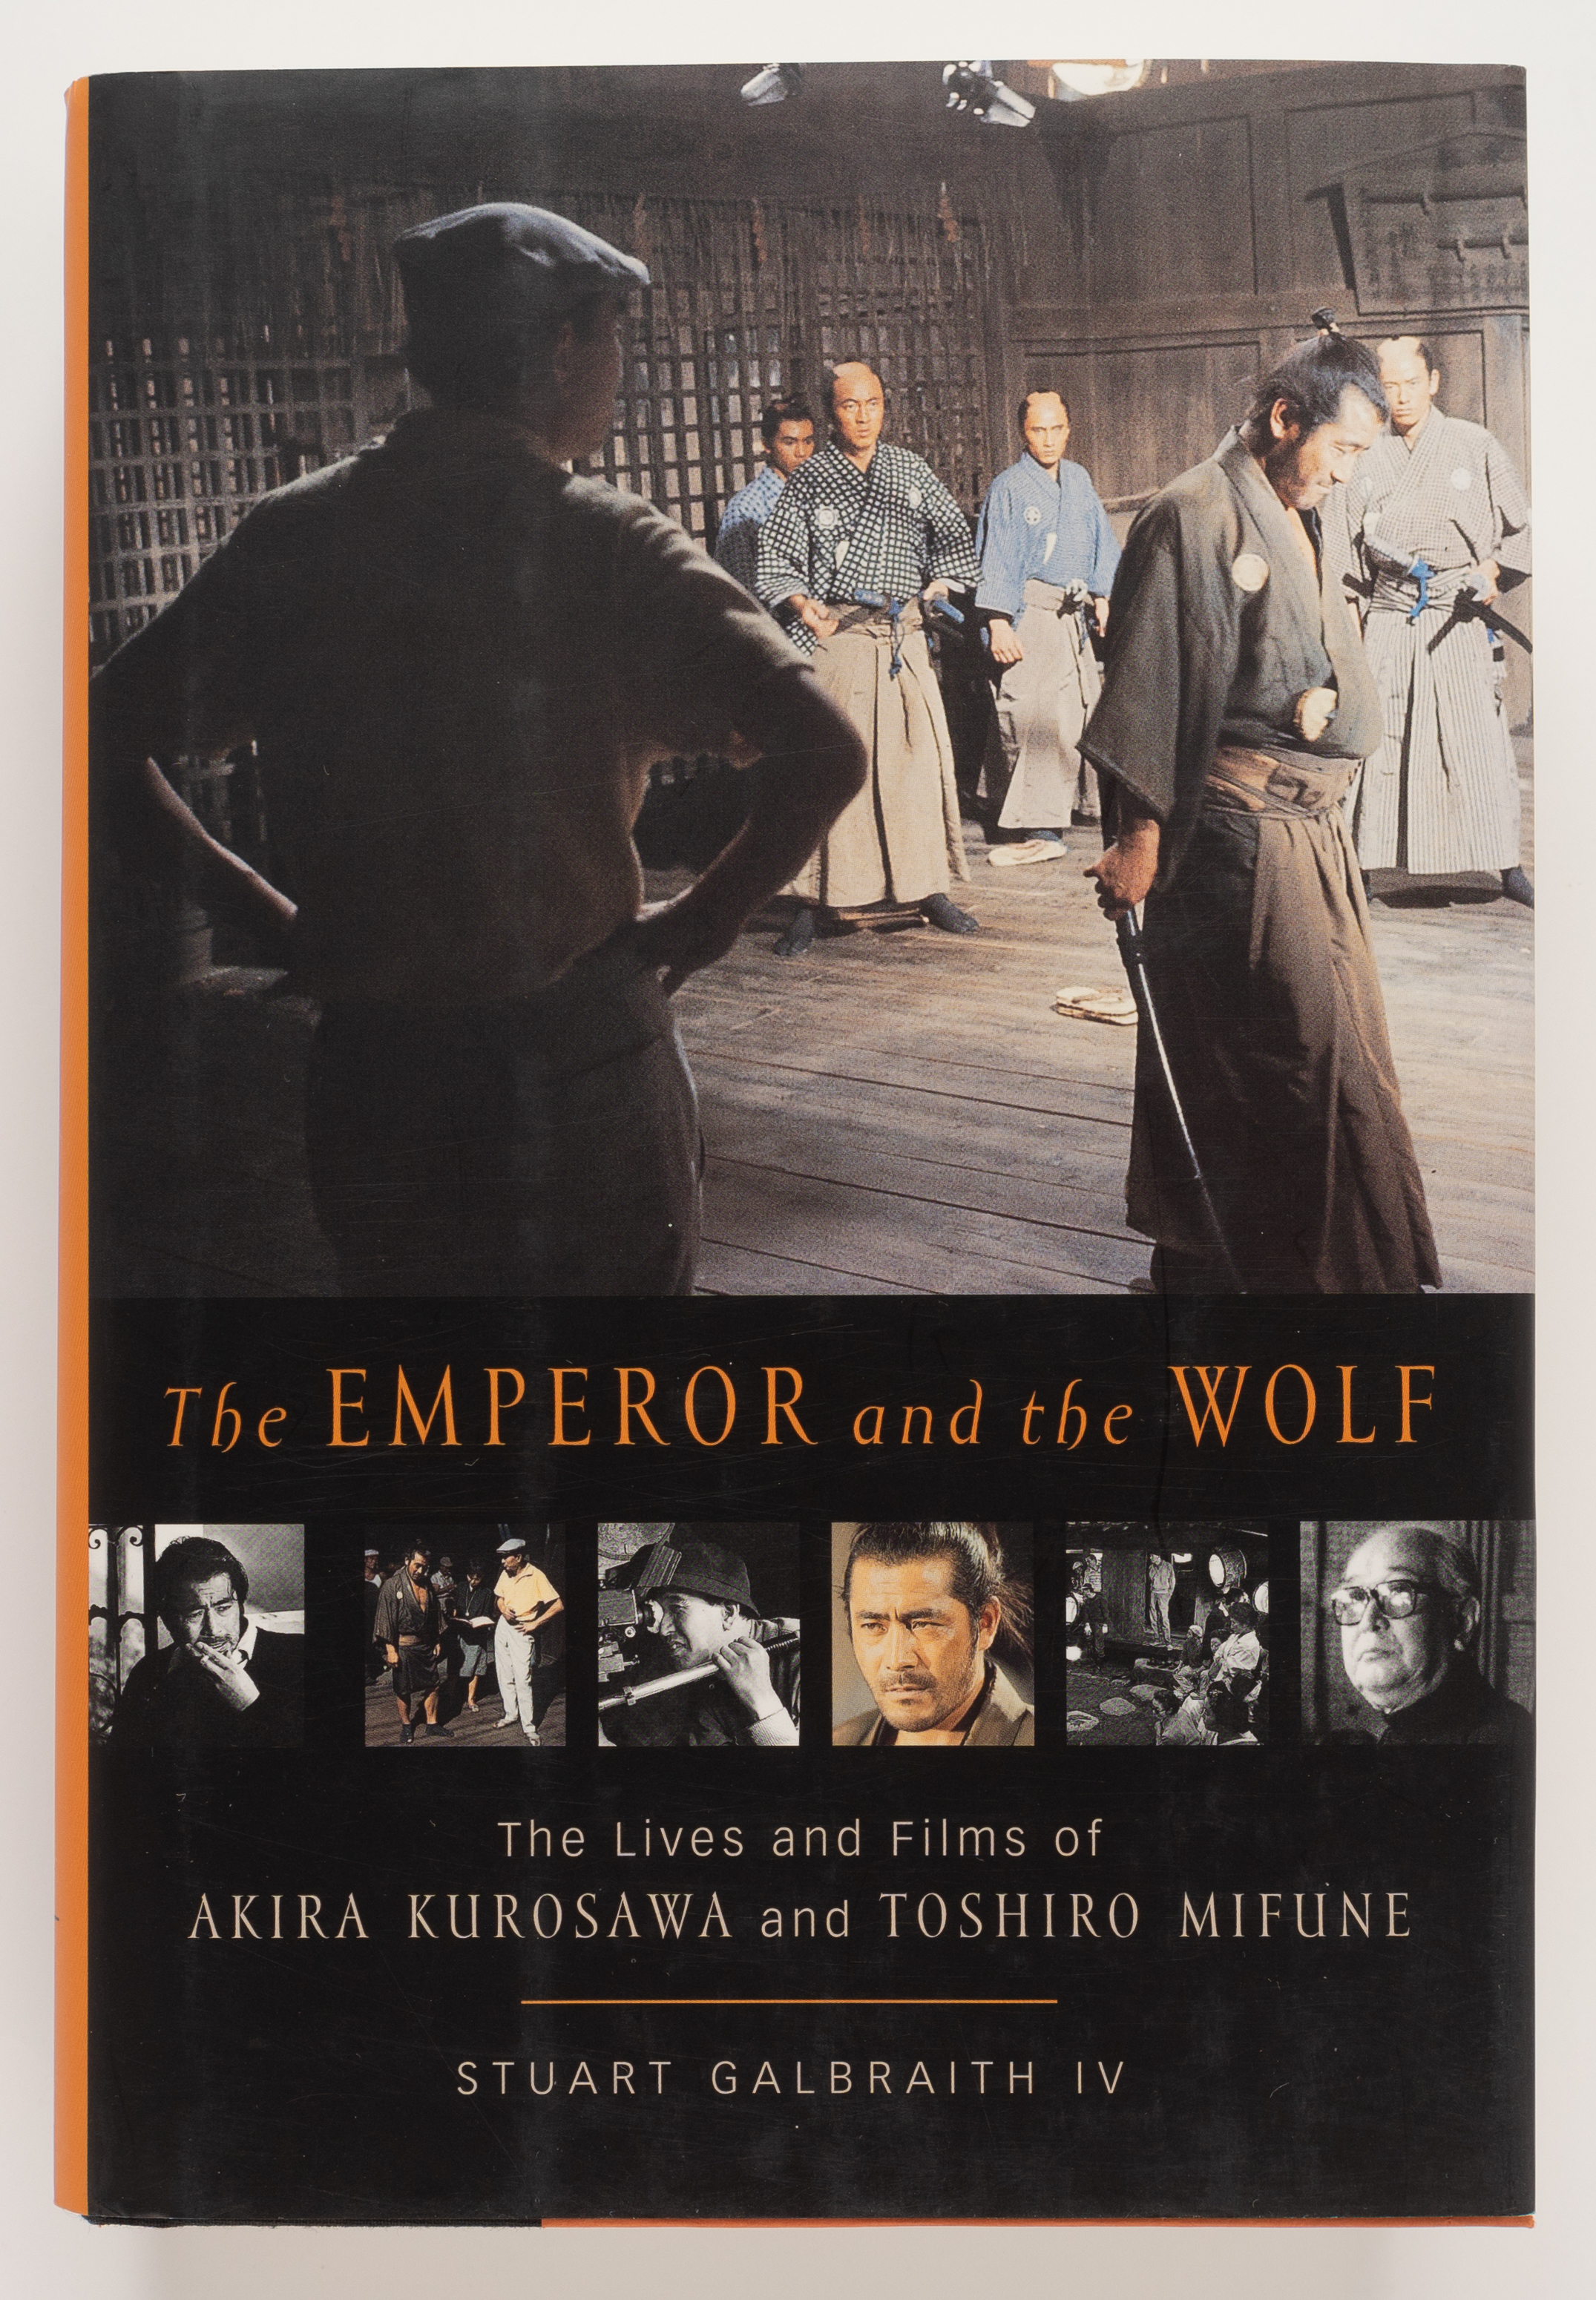 The Emperor and the Wolf: The Lives and Films of Akira Kurosawa and Toshiro Mifune - Stuart Galbraith IV